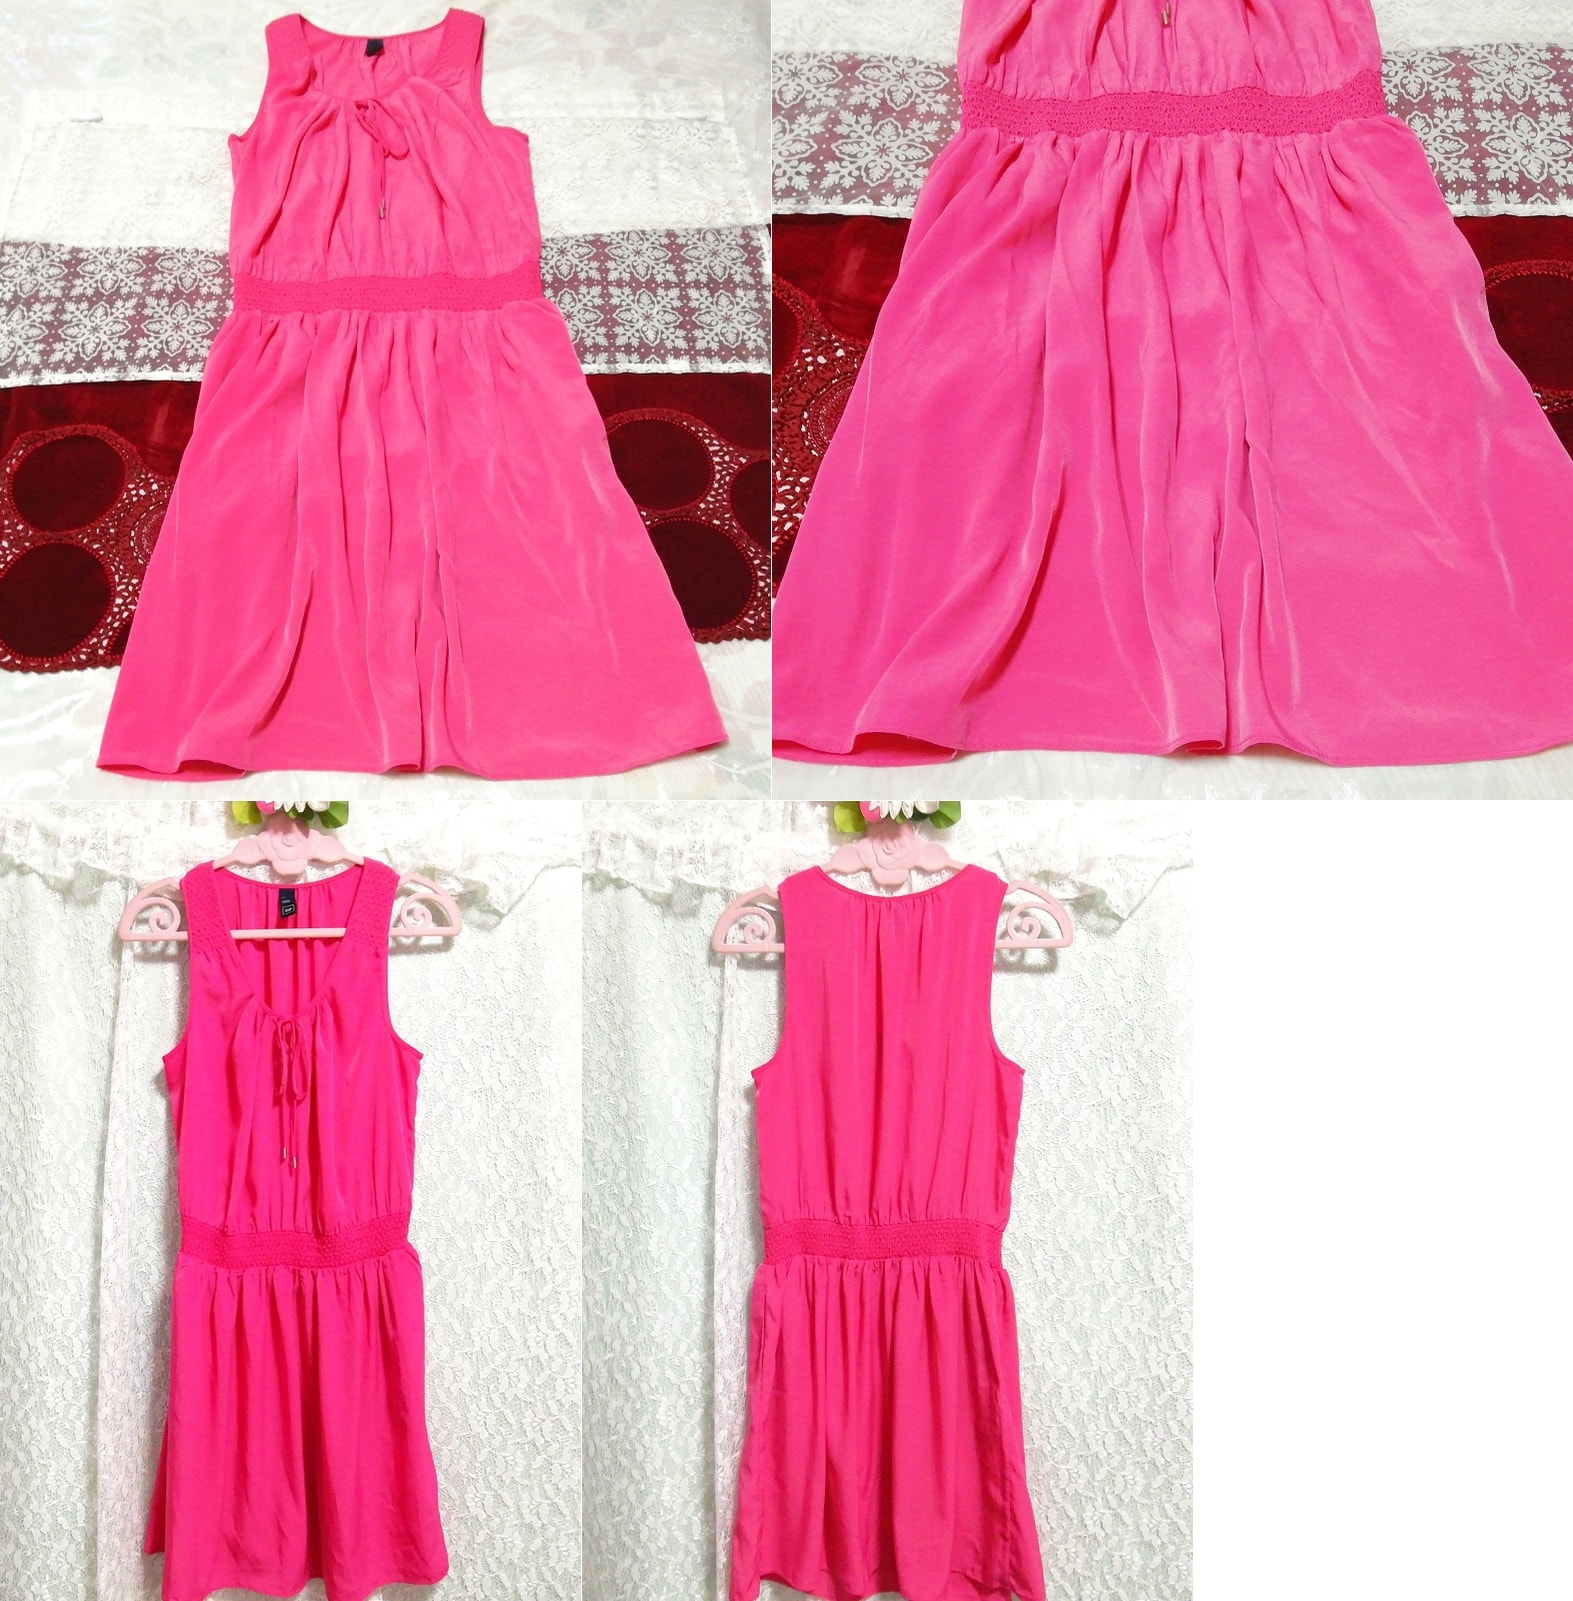 Camisón negligee sin mangas de gasa rosa fluorescente medio vestido, falda hasta la rodilla, talla m